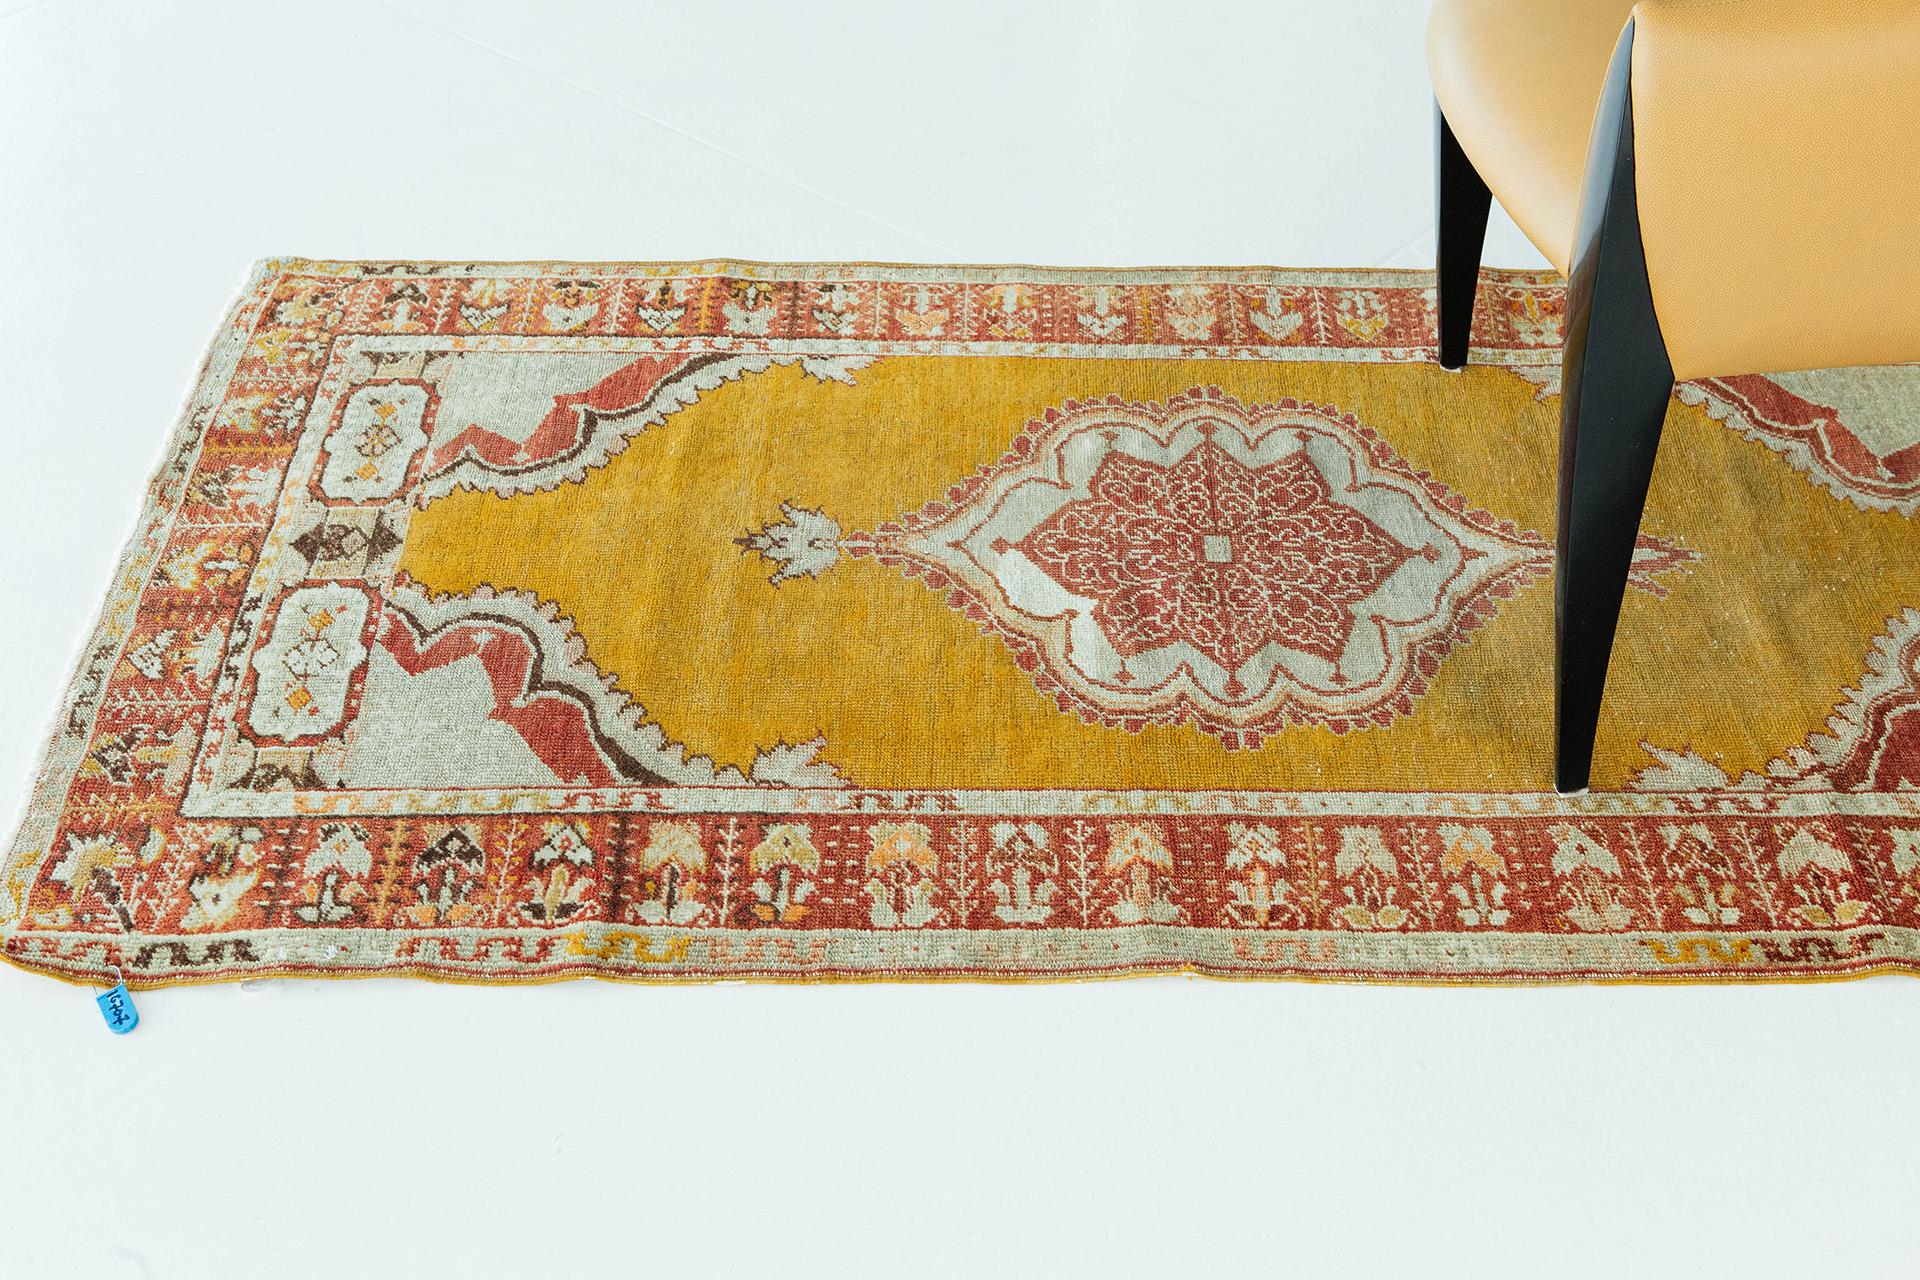 Vintage Turkish Anatolian Rug For Sale 1